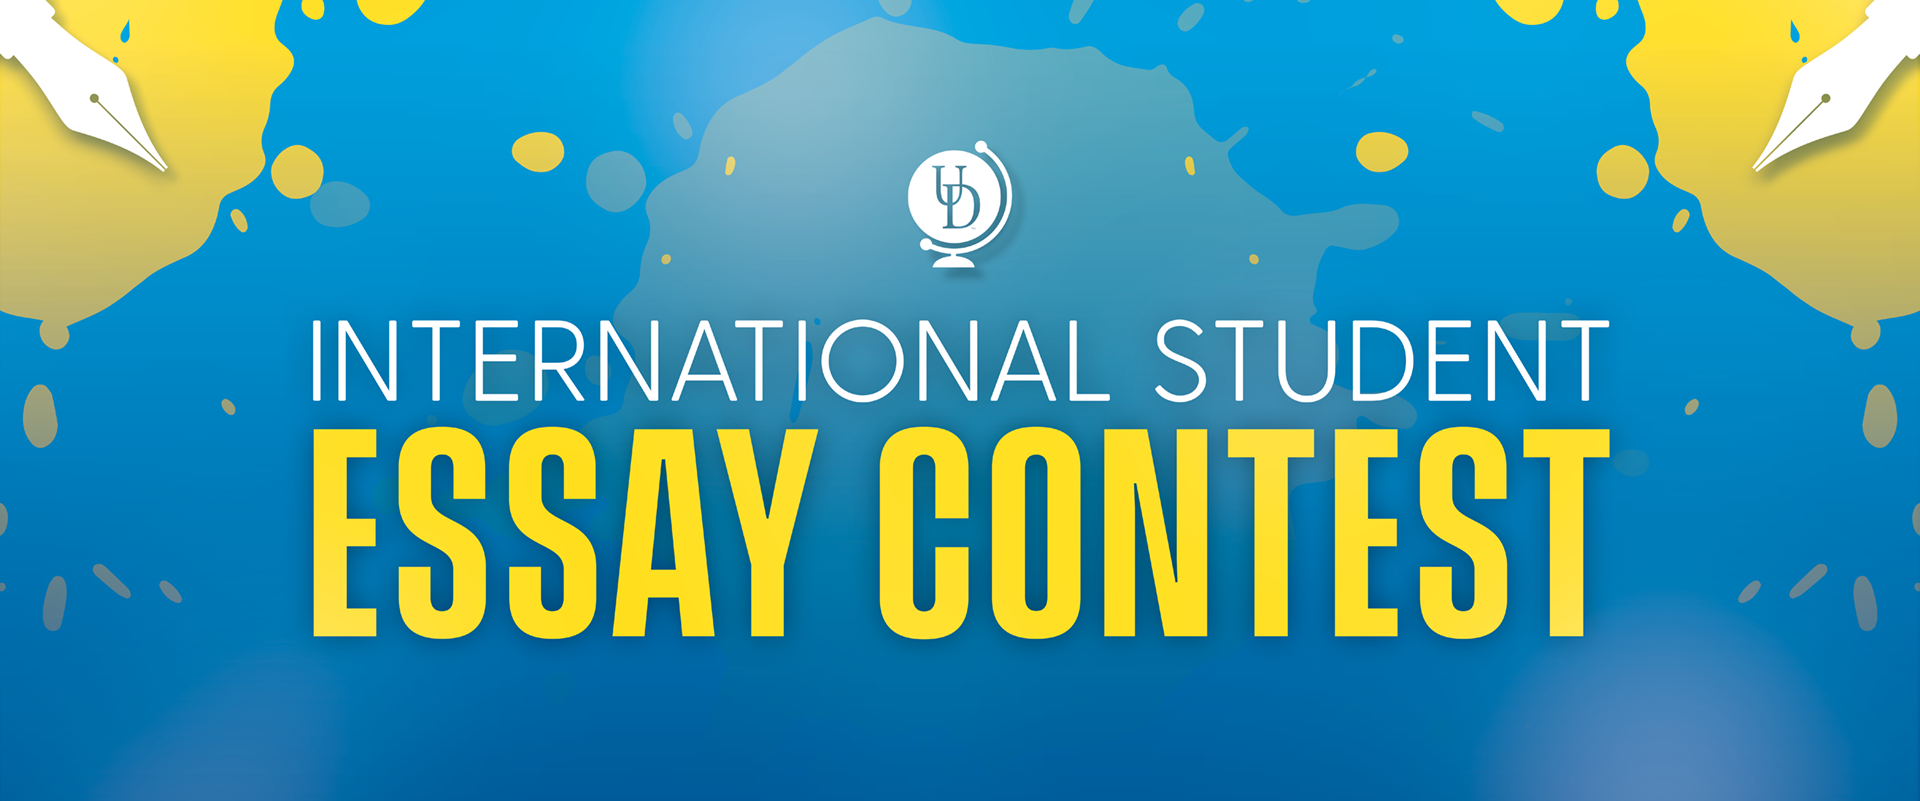 international essay contest for high school students